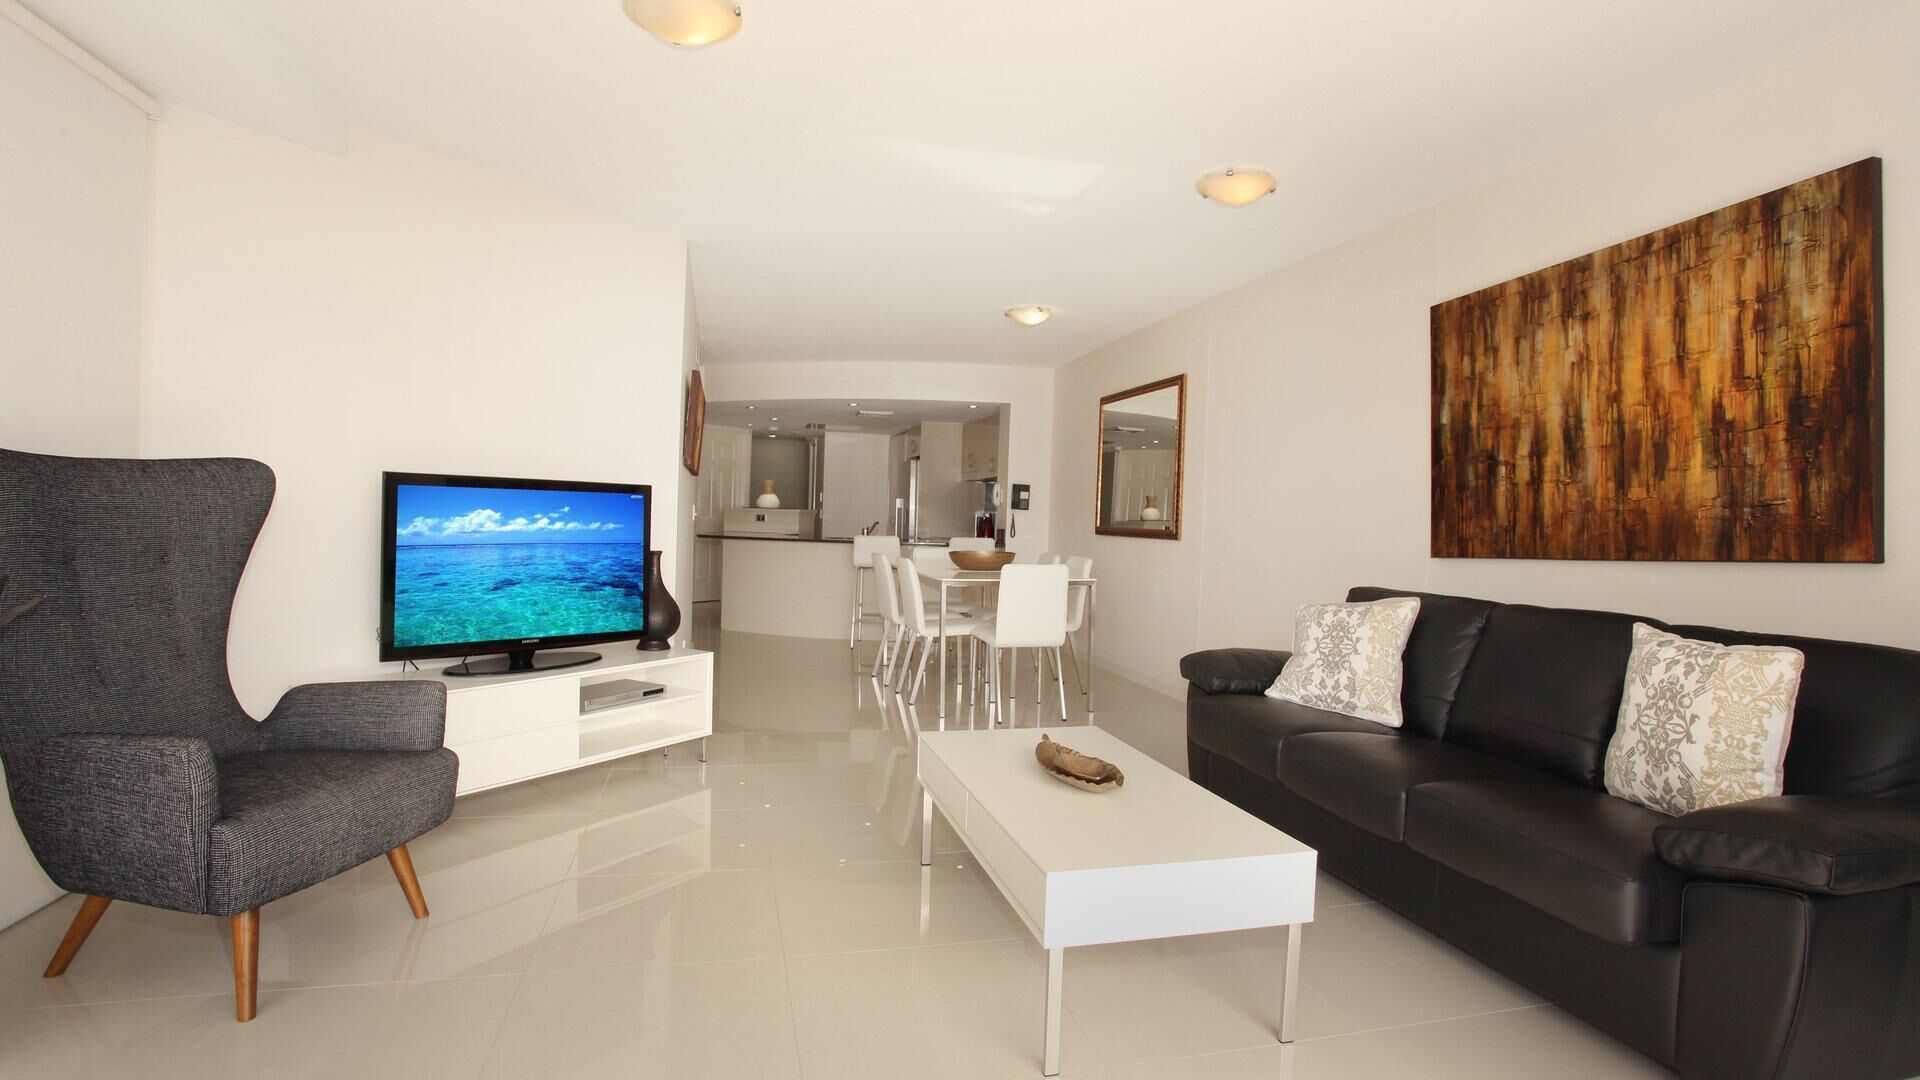 Zanzibar 404 - To Bedroom newly renovated Unit in Resort along Mooloolaba ESplanade